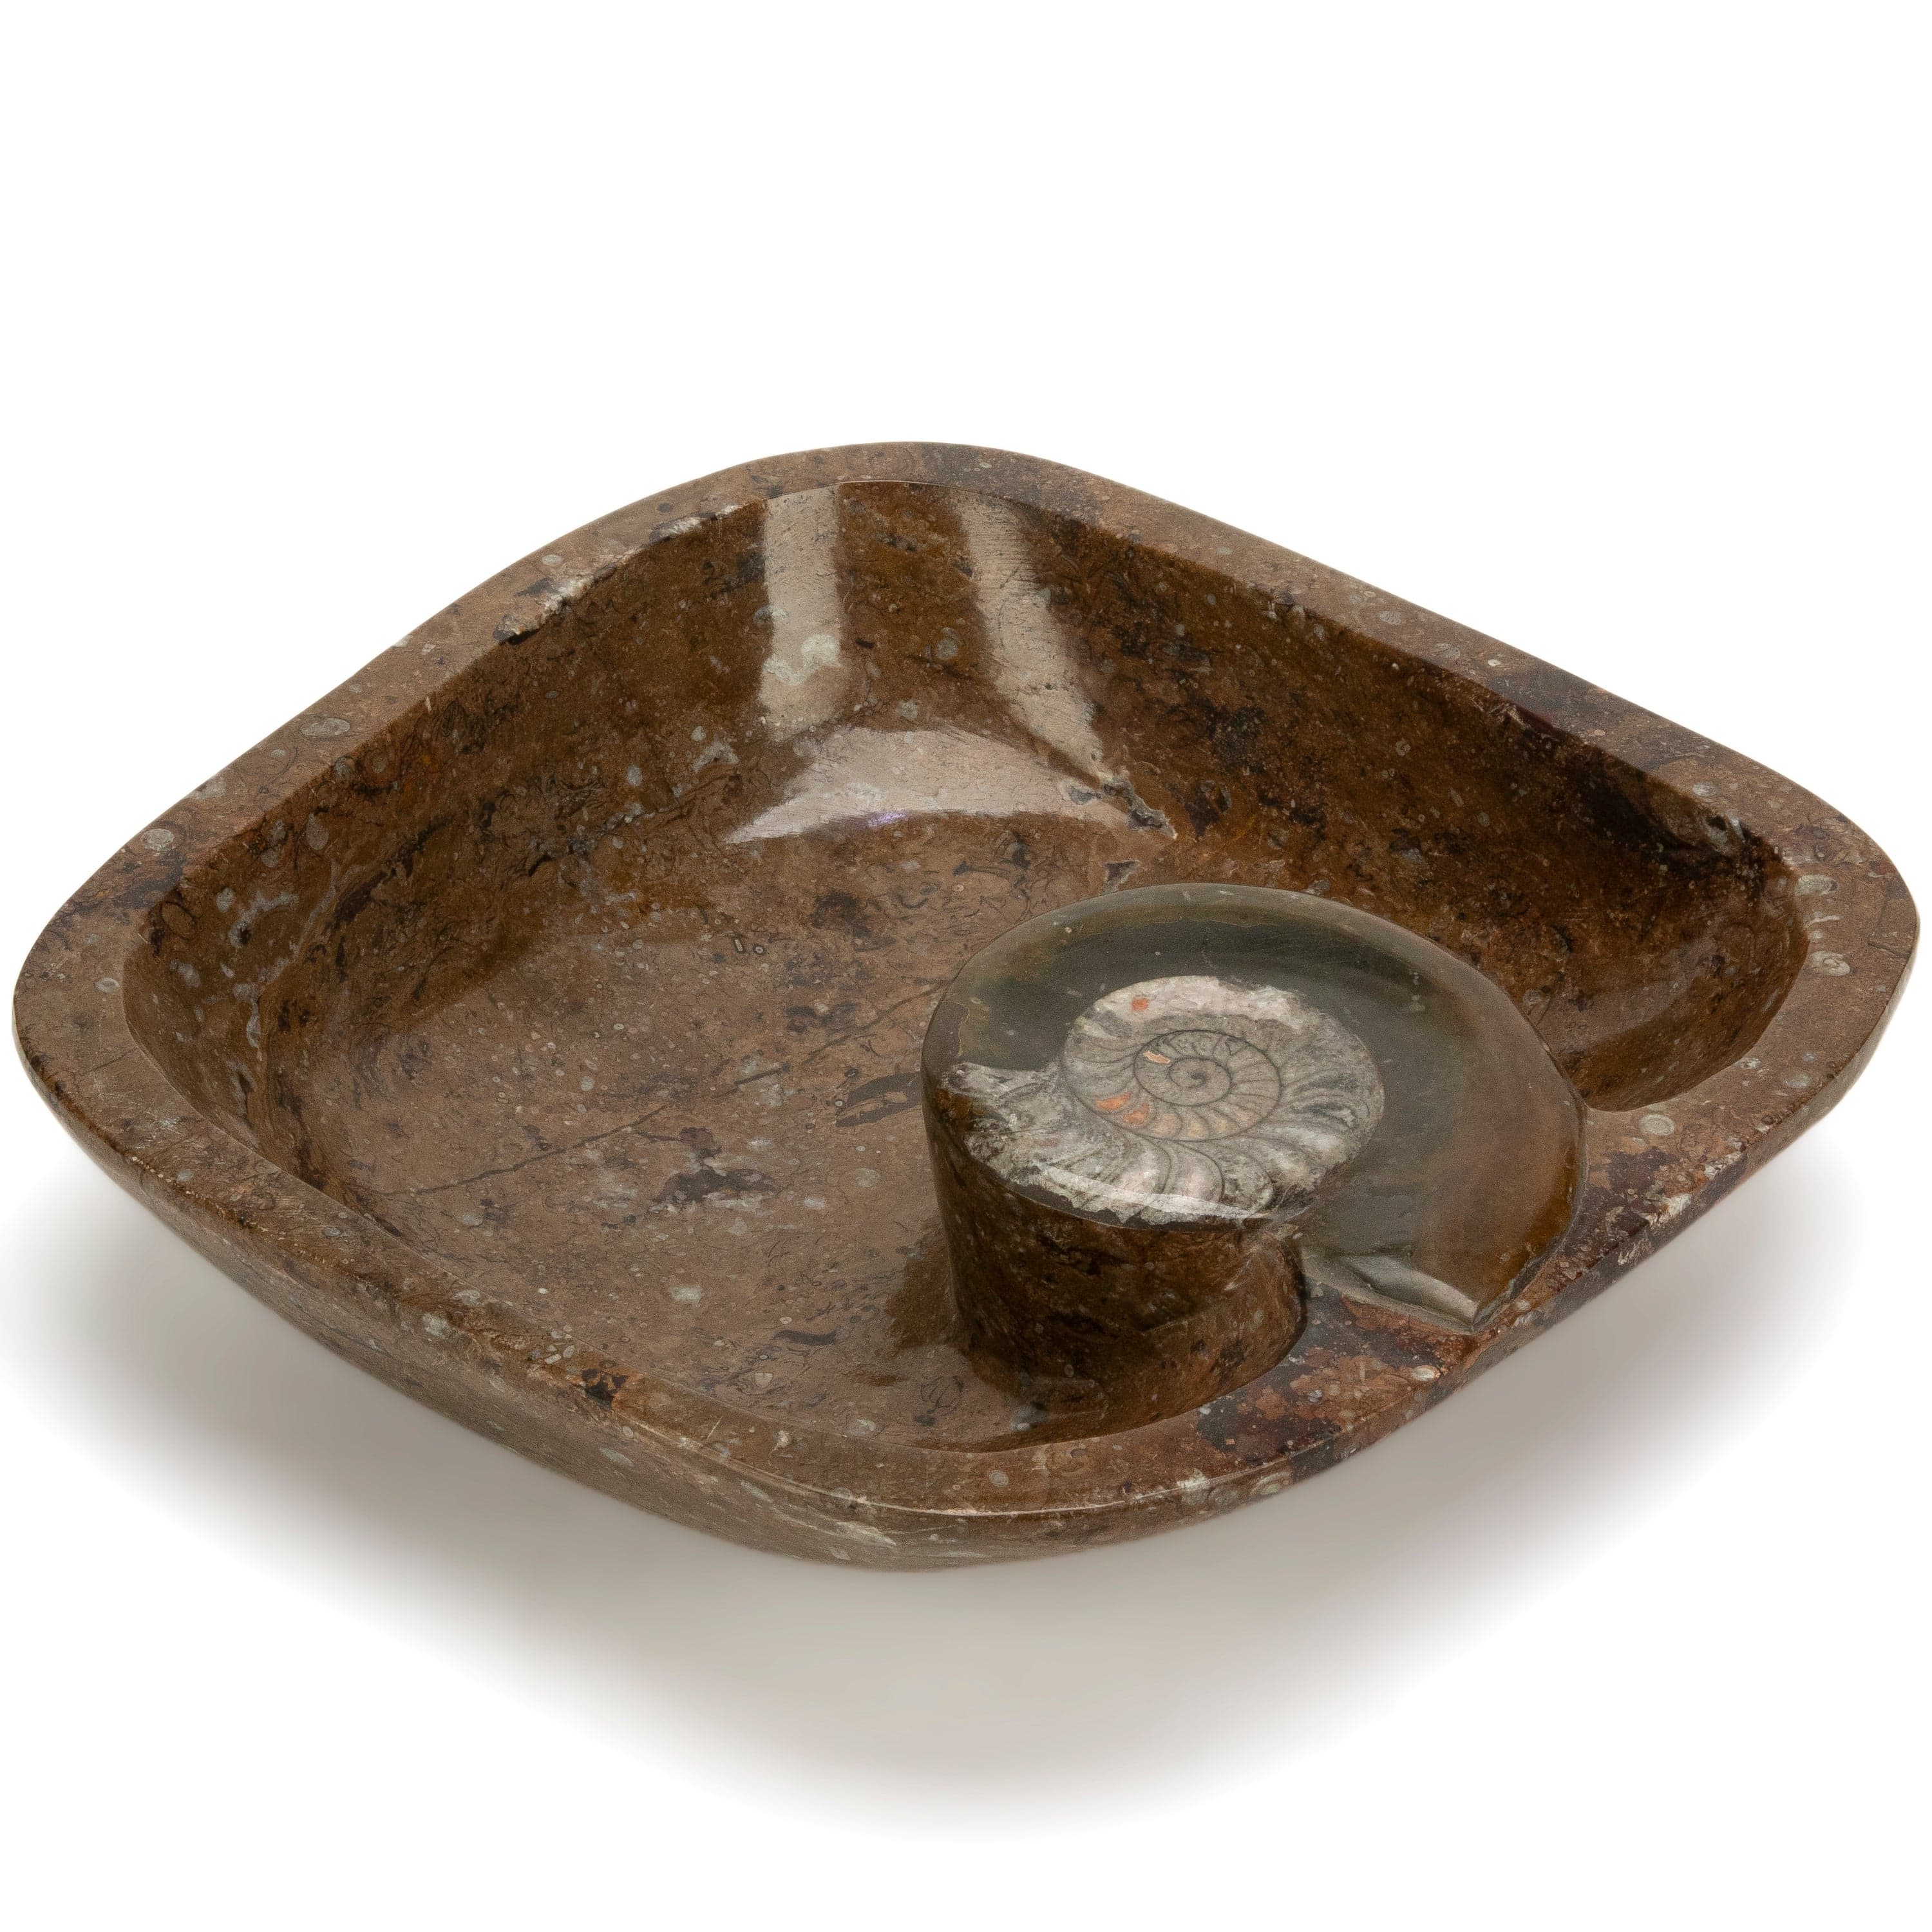 KALIFANO Ammonite Ammonite Fossil Sink Bowl from Morocco - 15" AMBOWL3200.005